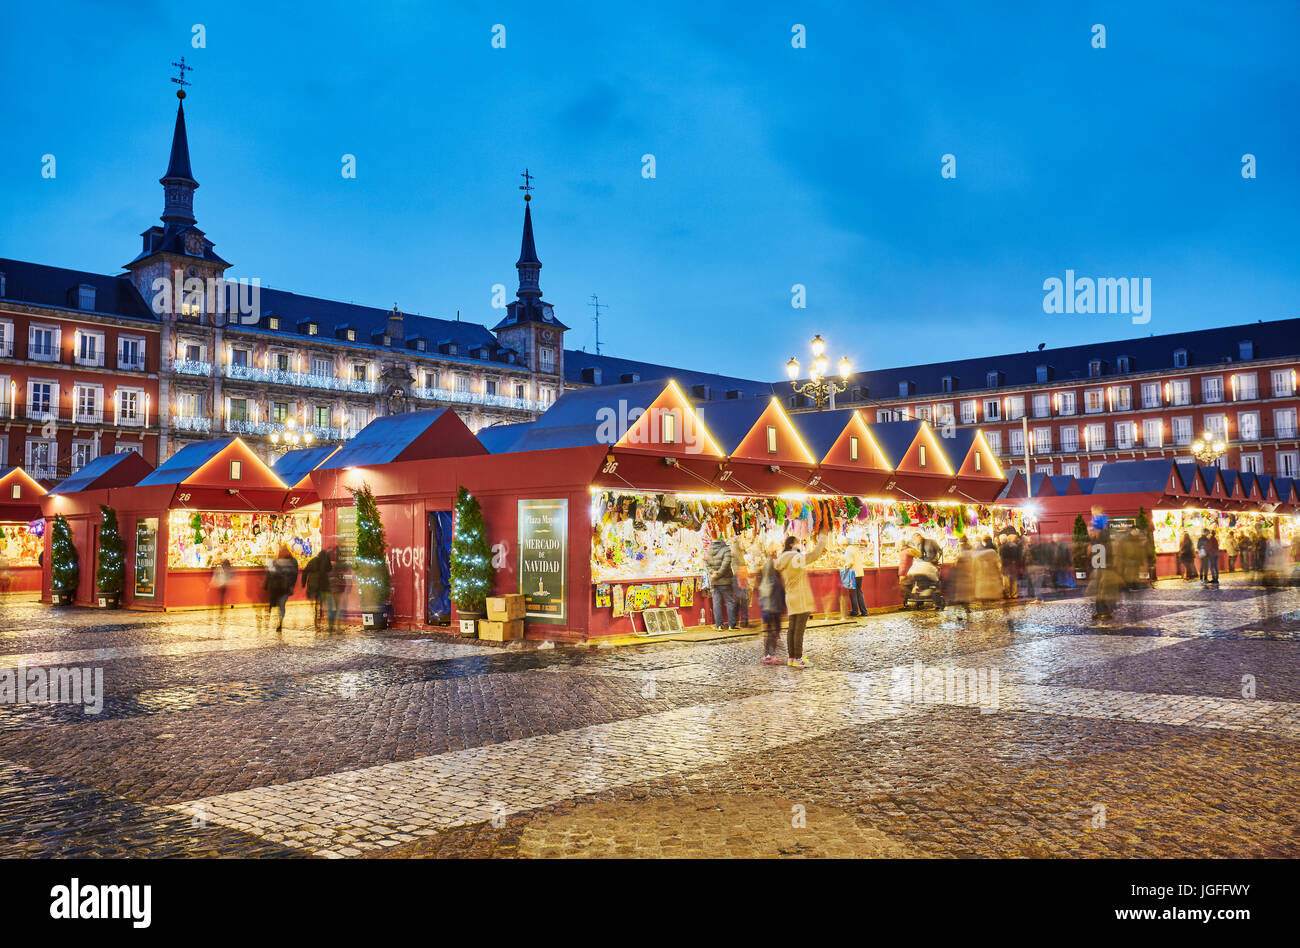 Natale A Madrid.Christmas Market In Plaza Mayor At Christmastime Madrid Spain Stock Photo Alamy